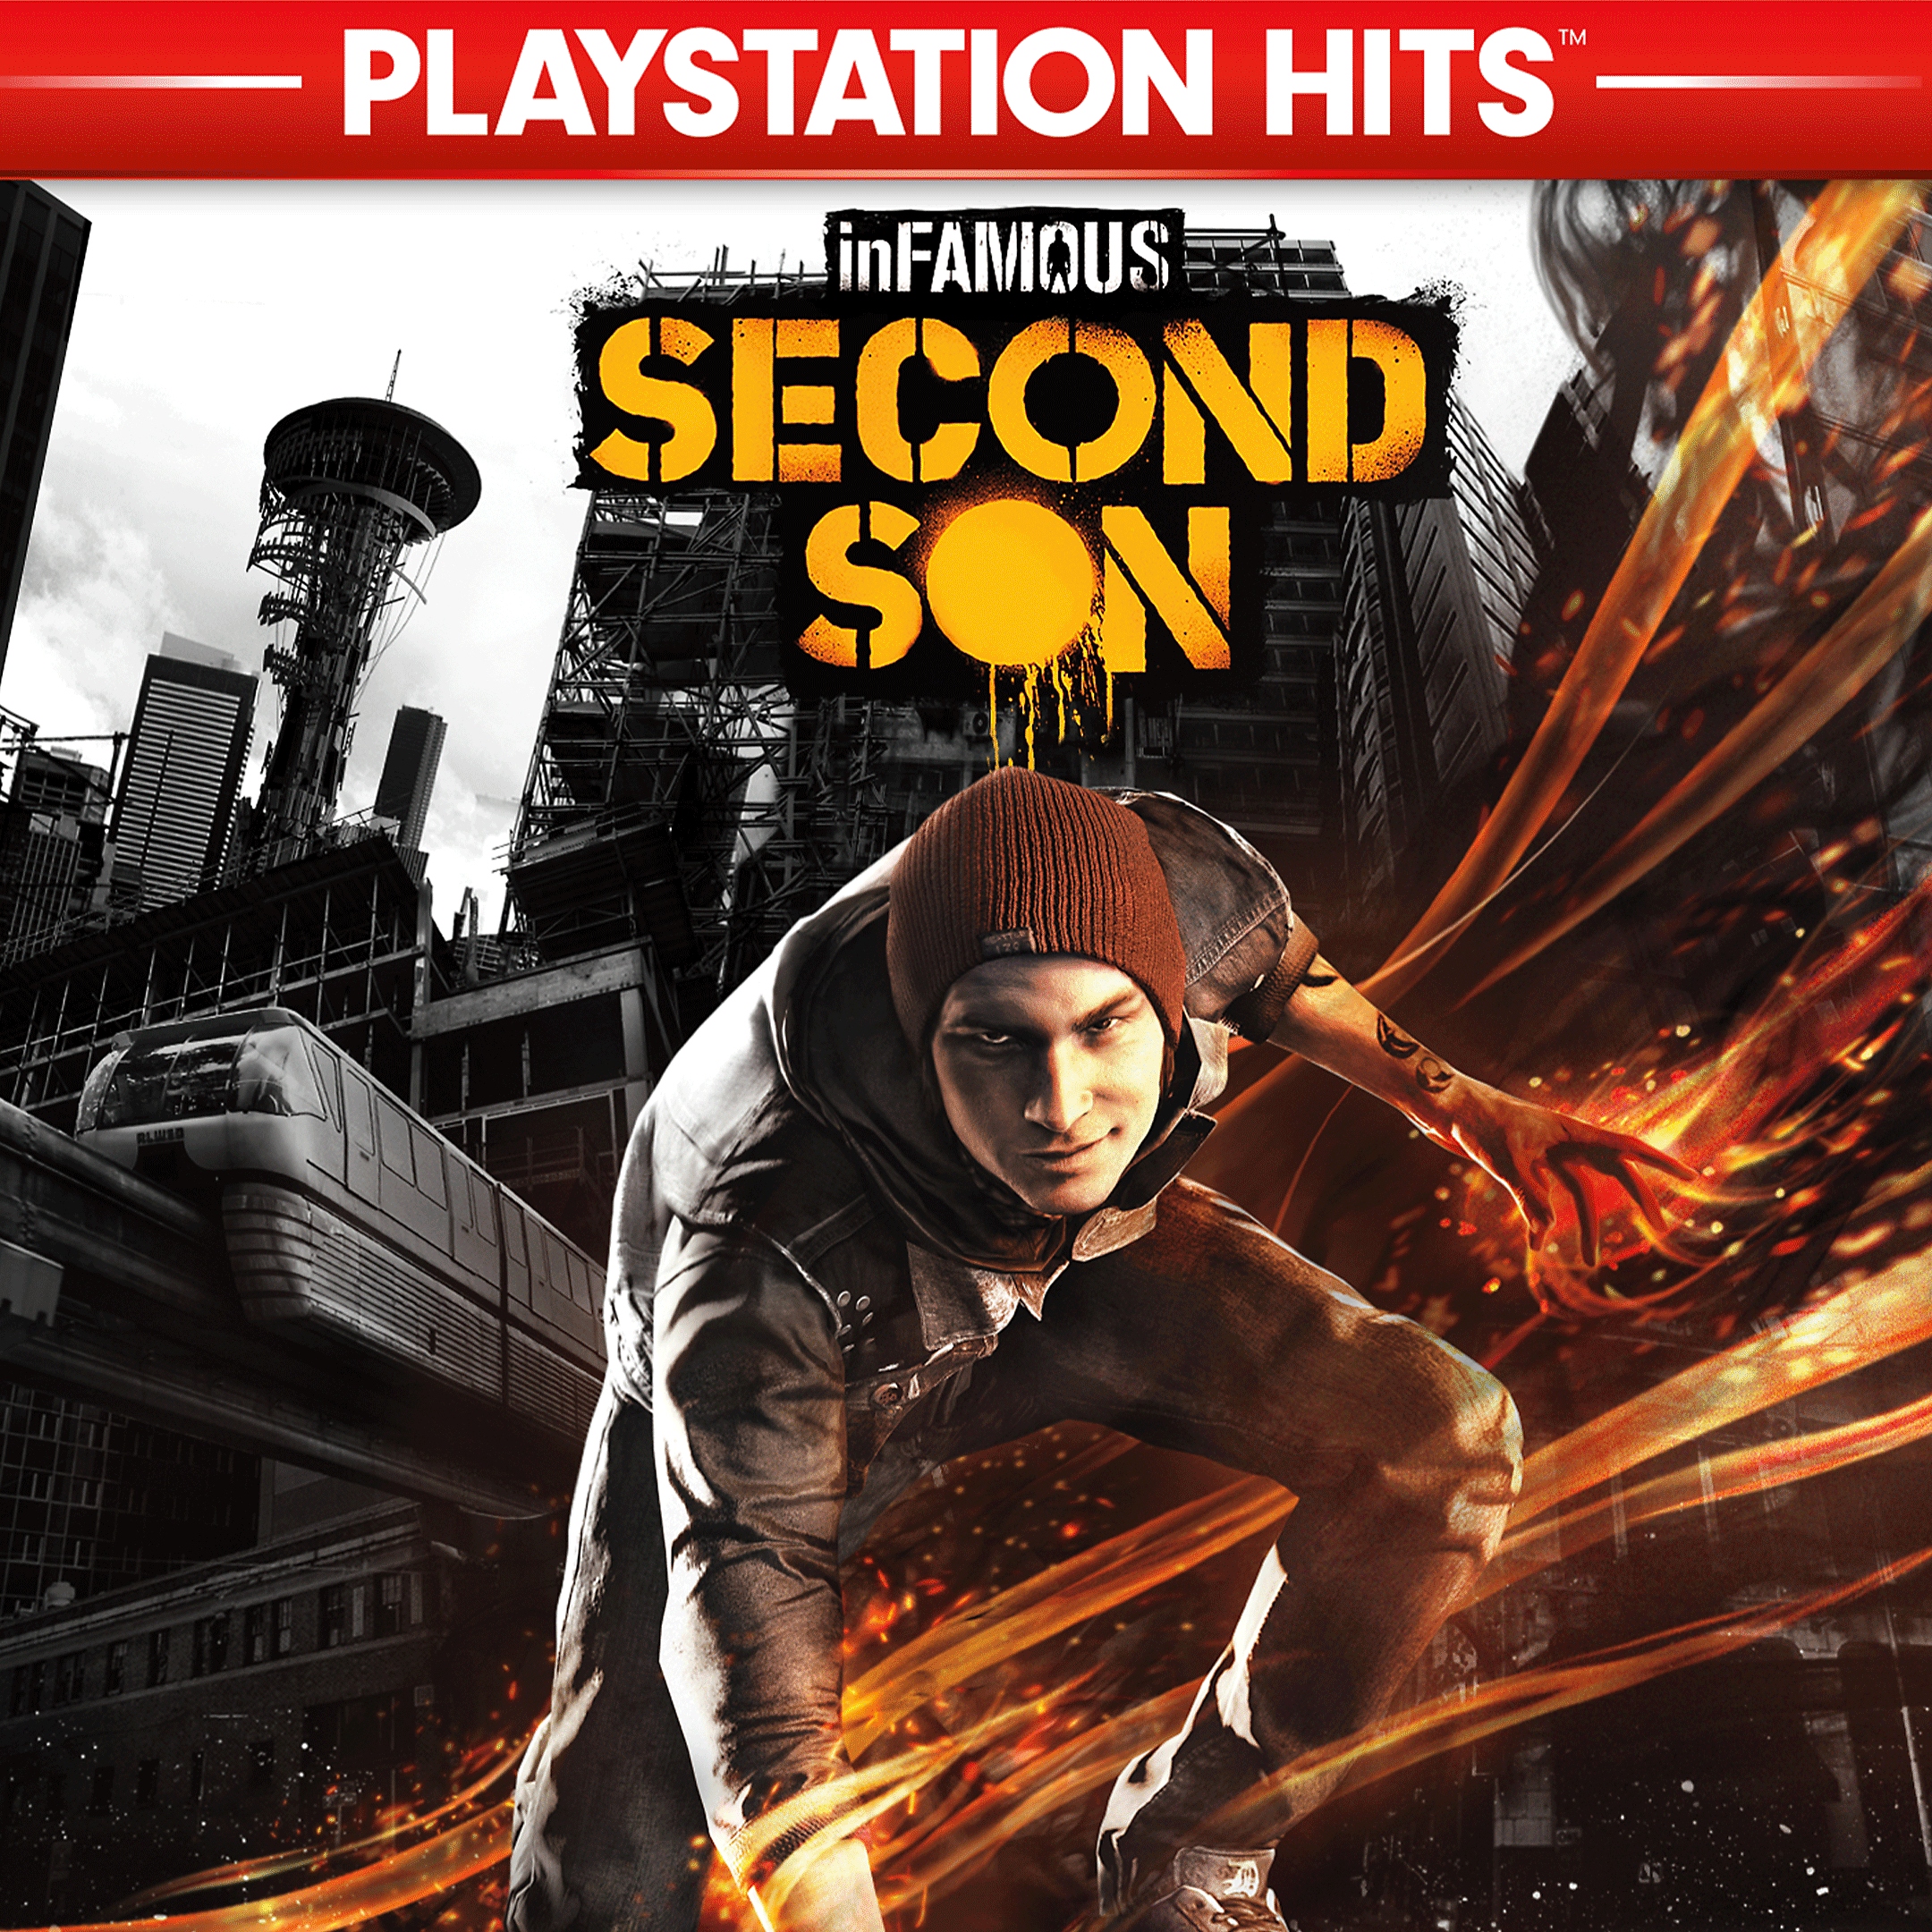 PlayStation Hits Infamous Second Son Natal PlayStation